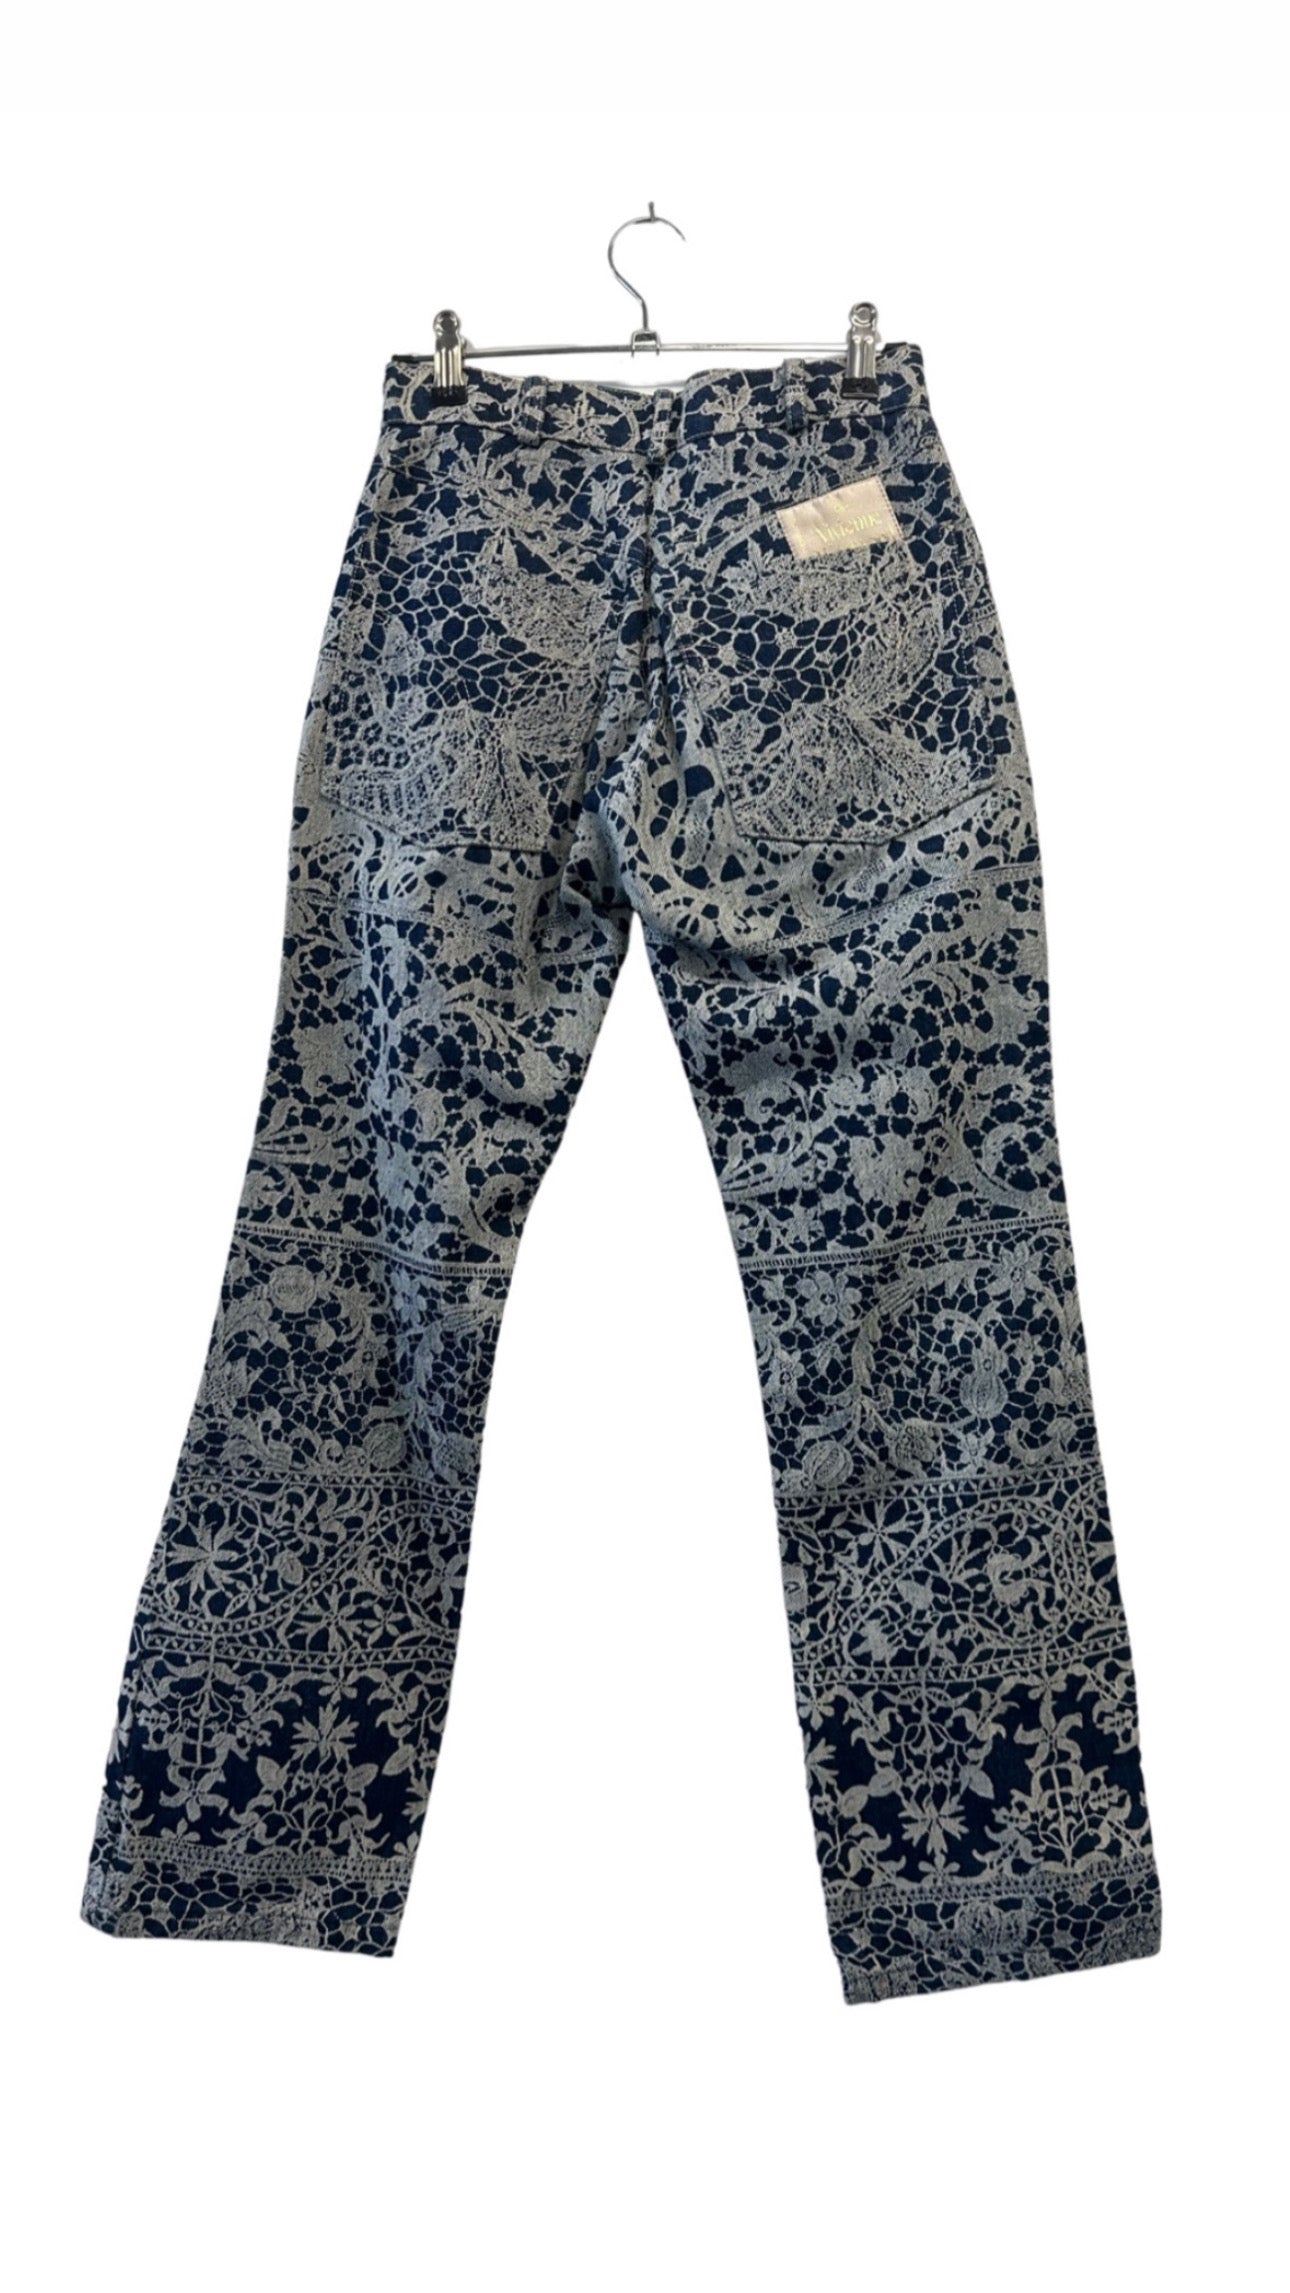 Vivienne Westwood FW 1992 Jeans